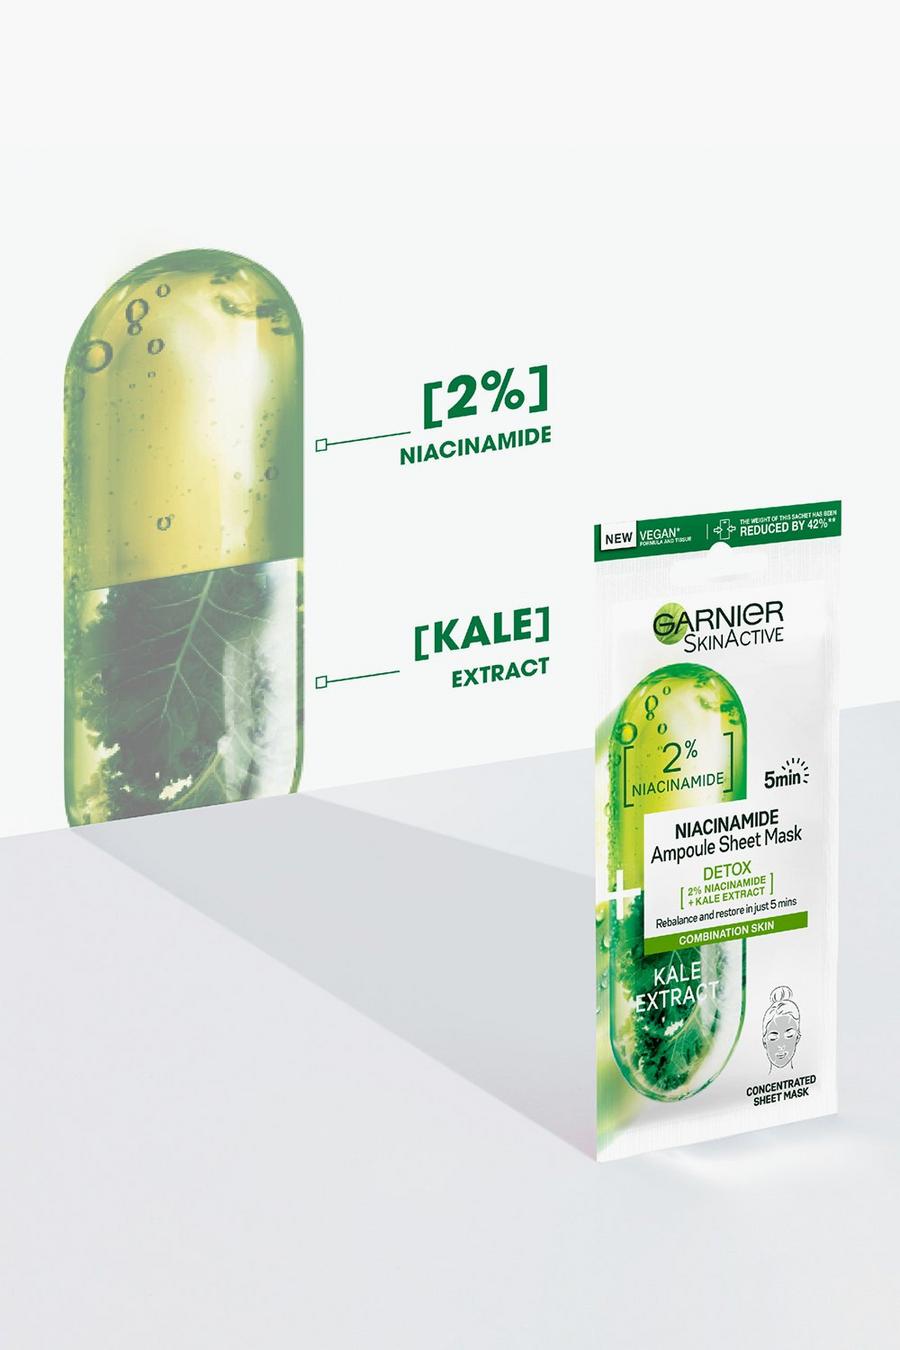 Mascarilla en ampolla de lámina detoxificante Skinactive de Garnier, Verde